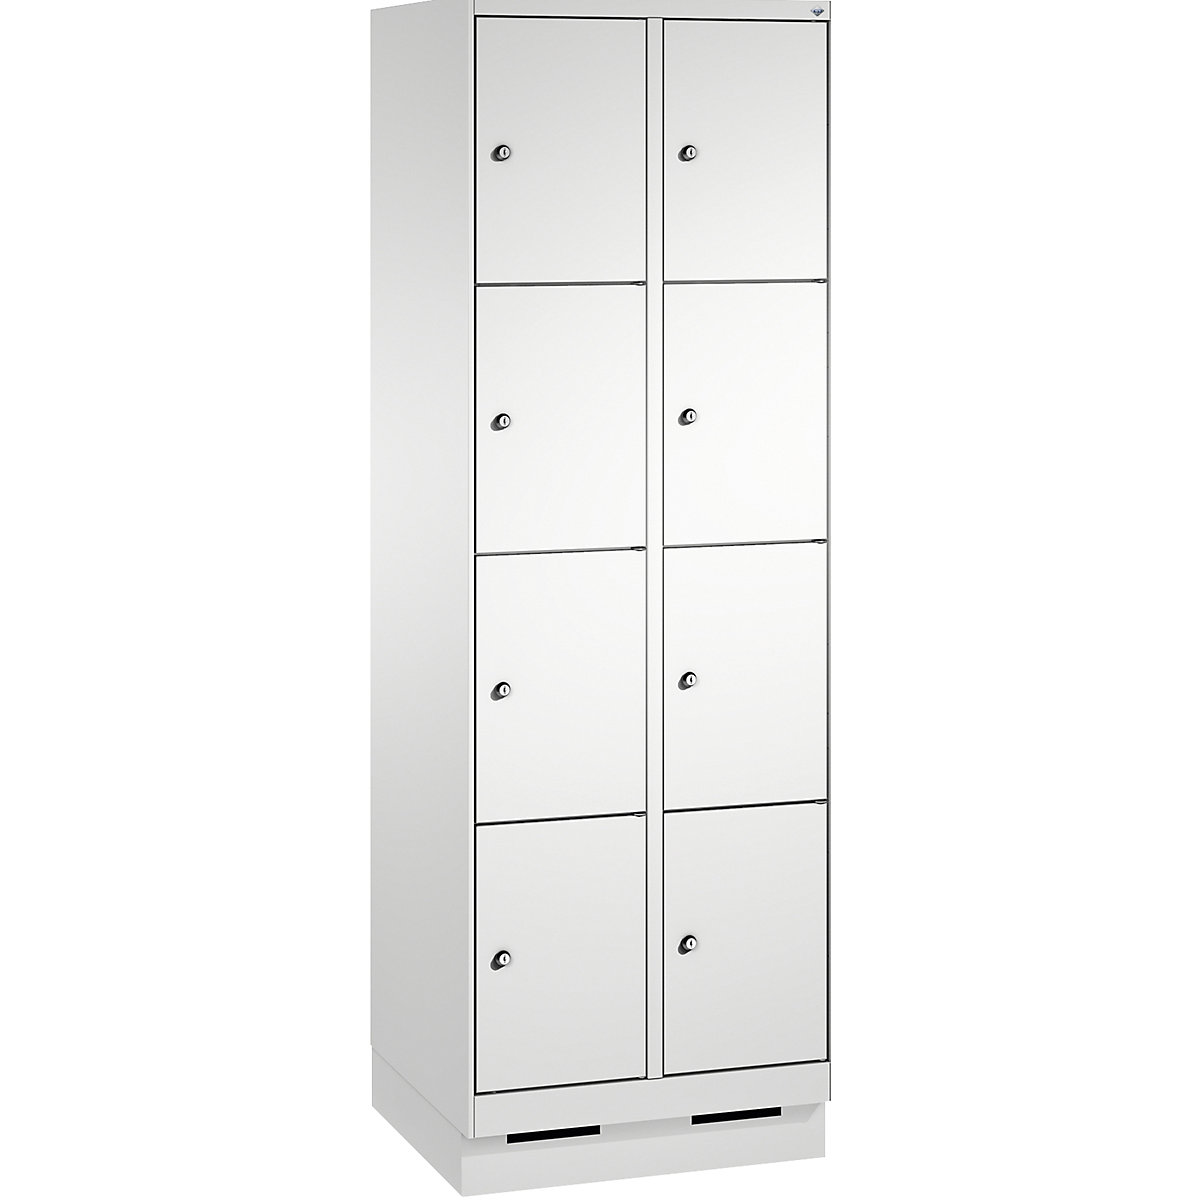 EVOLO locker unit, with plinth – C+P, 2 compartments, 4 shelf compartments each, compartment width 300 mm, light grey / light grey-8